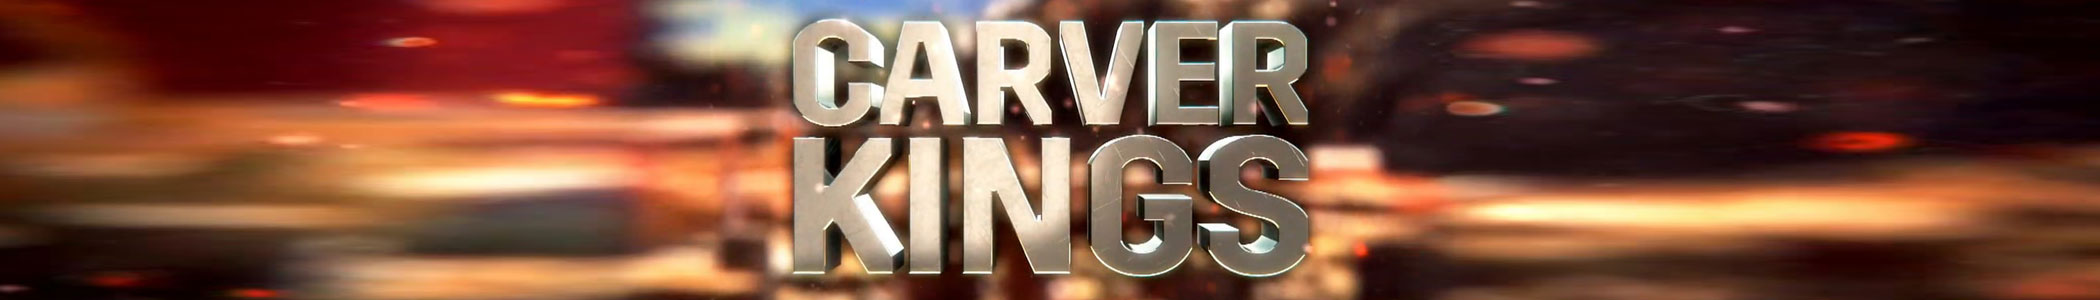 Carver Kings Netflix TV intro